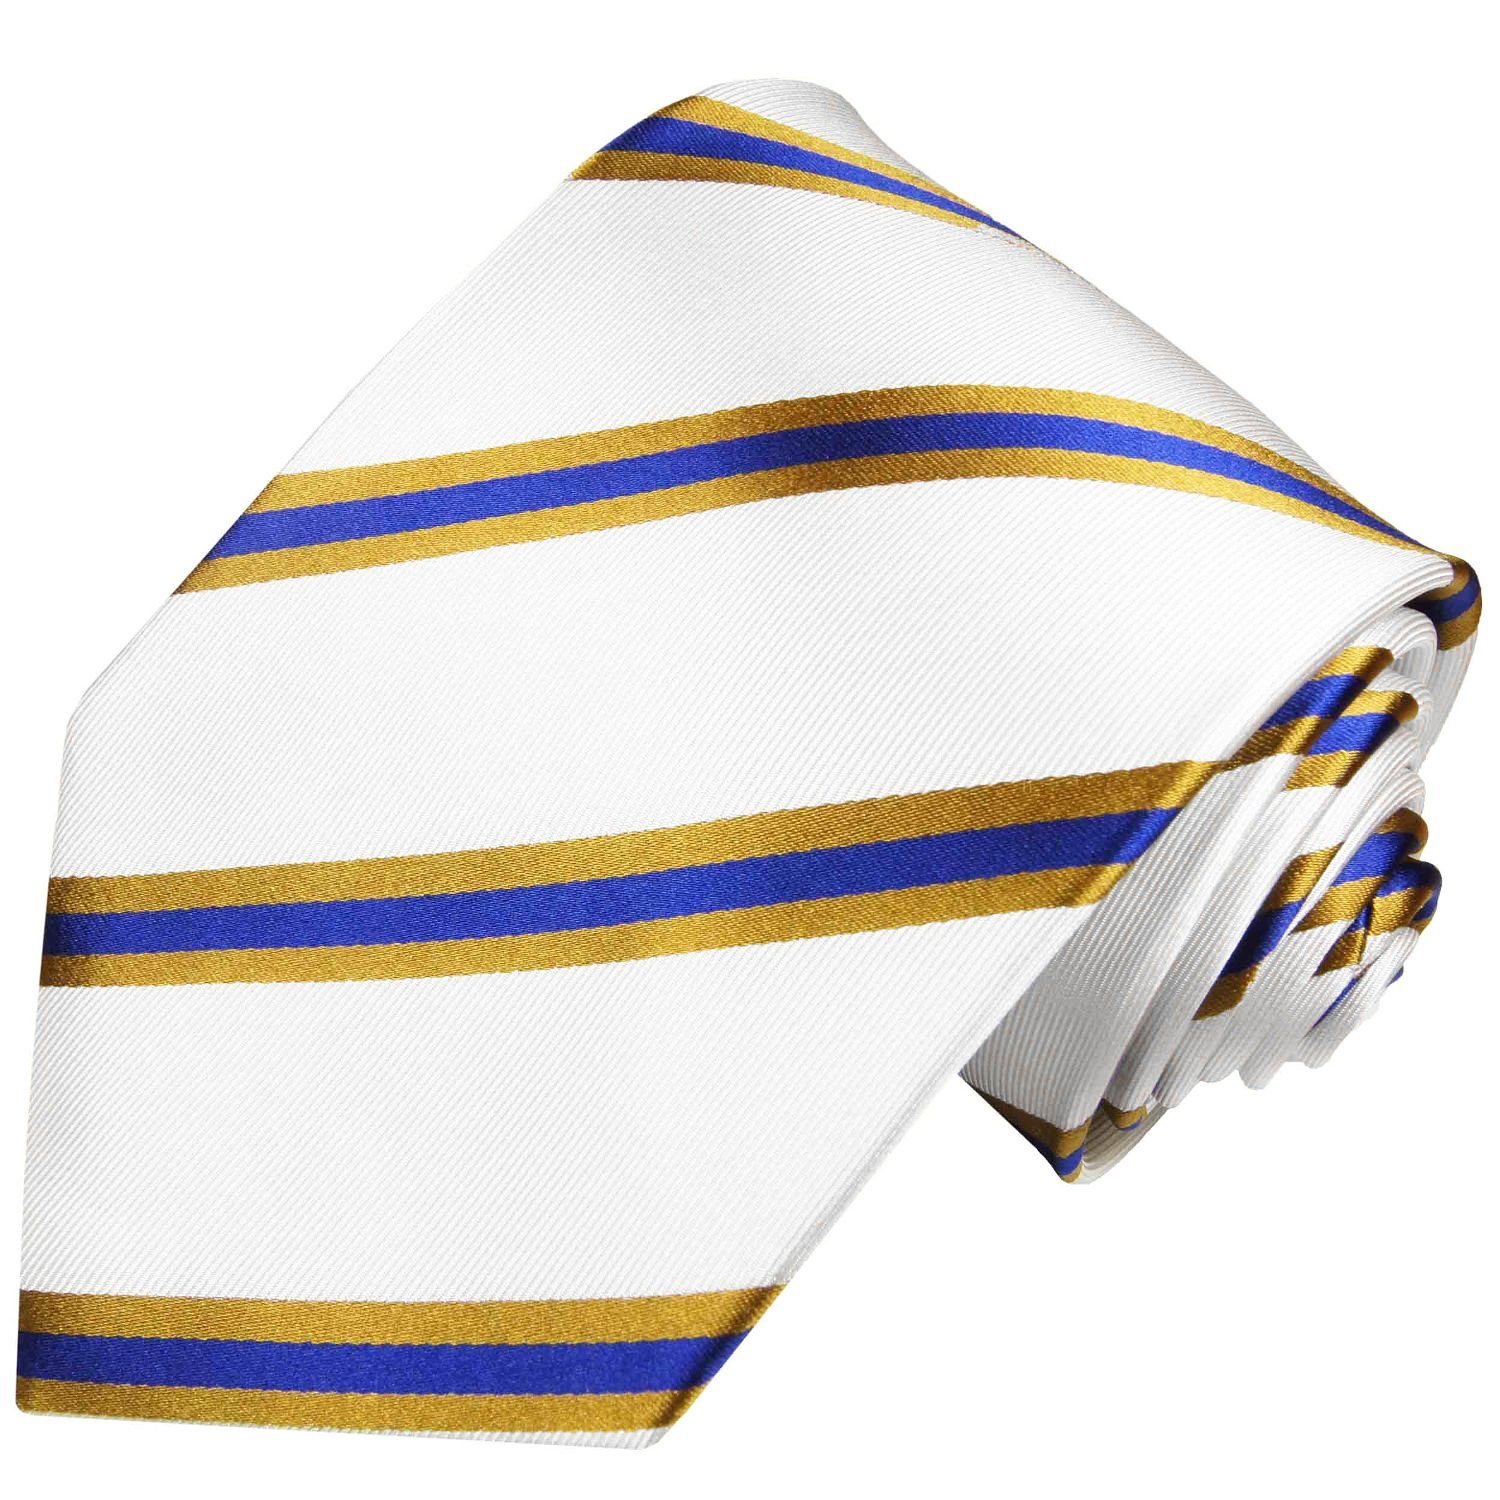 Paul Malone Krawatte Moderne Herren Seidenkrawatte gestreift 100% Seide Breit (8cm), blau weiß gold 782